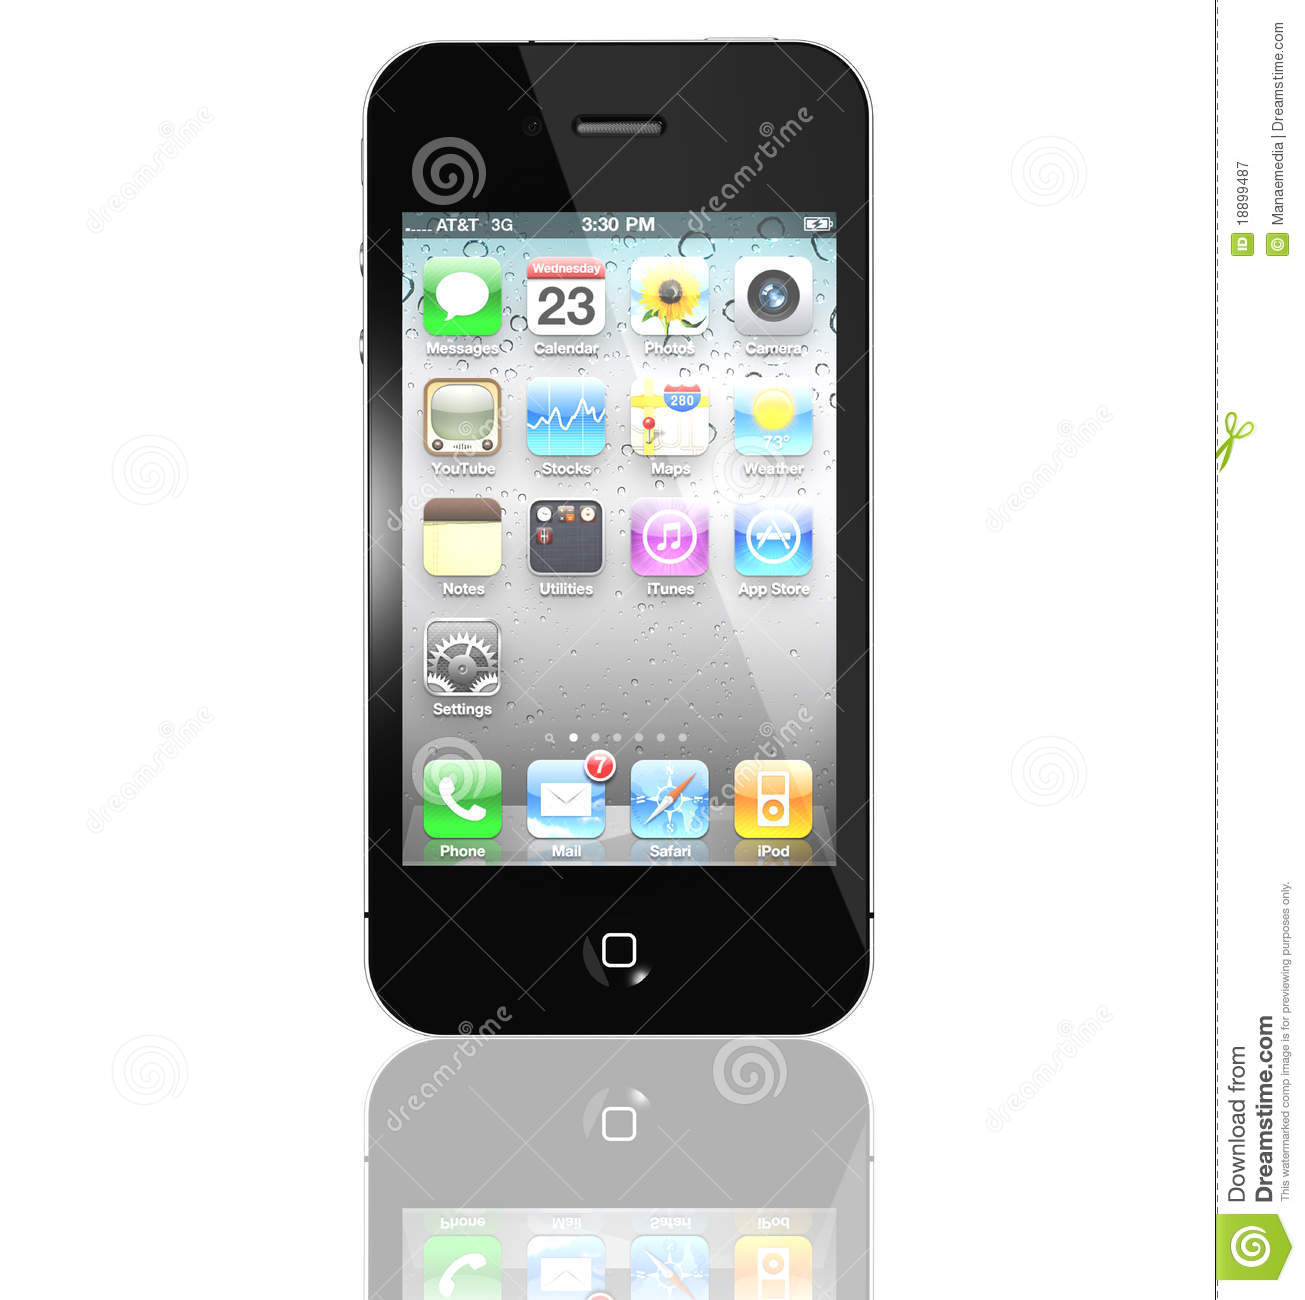 Apple iPhone 4S Icons